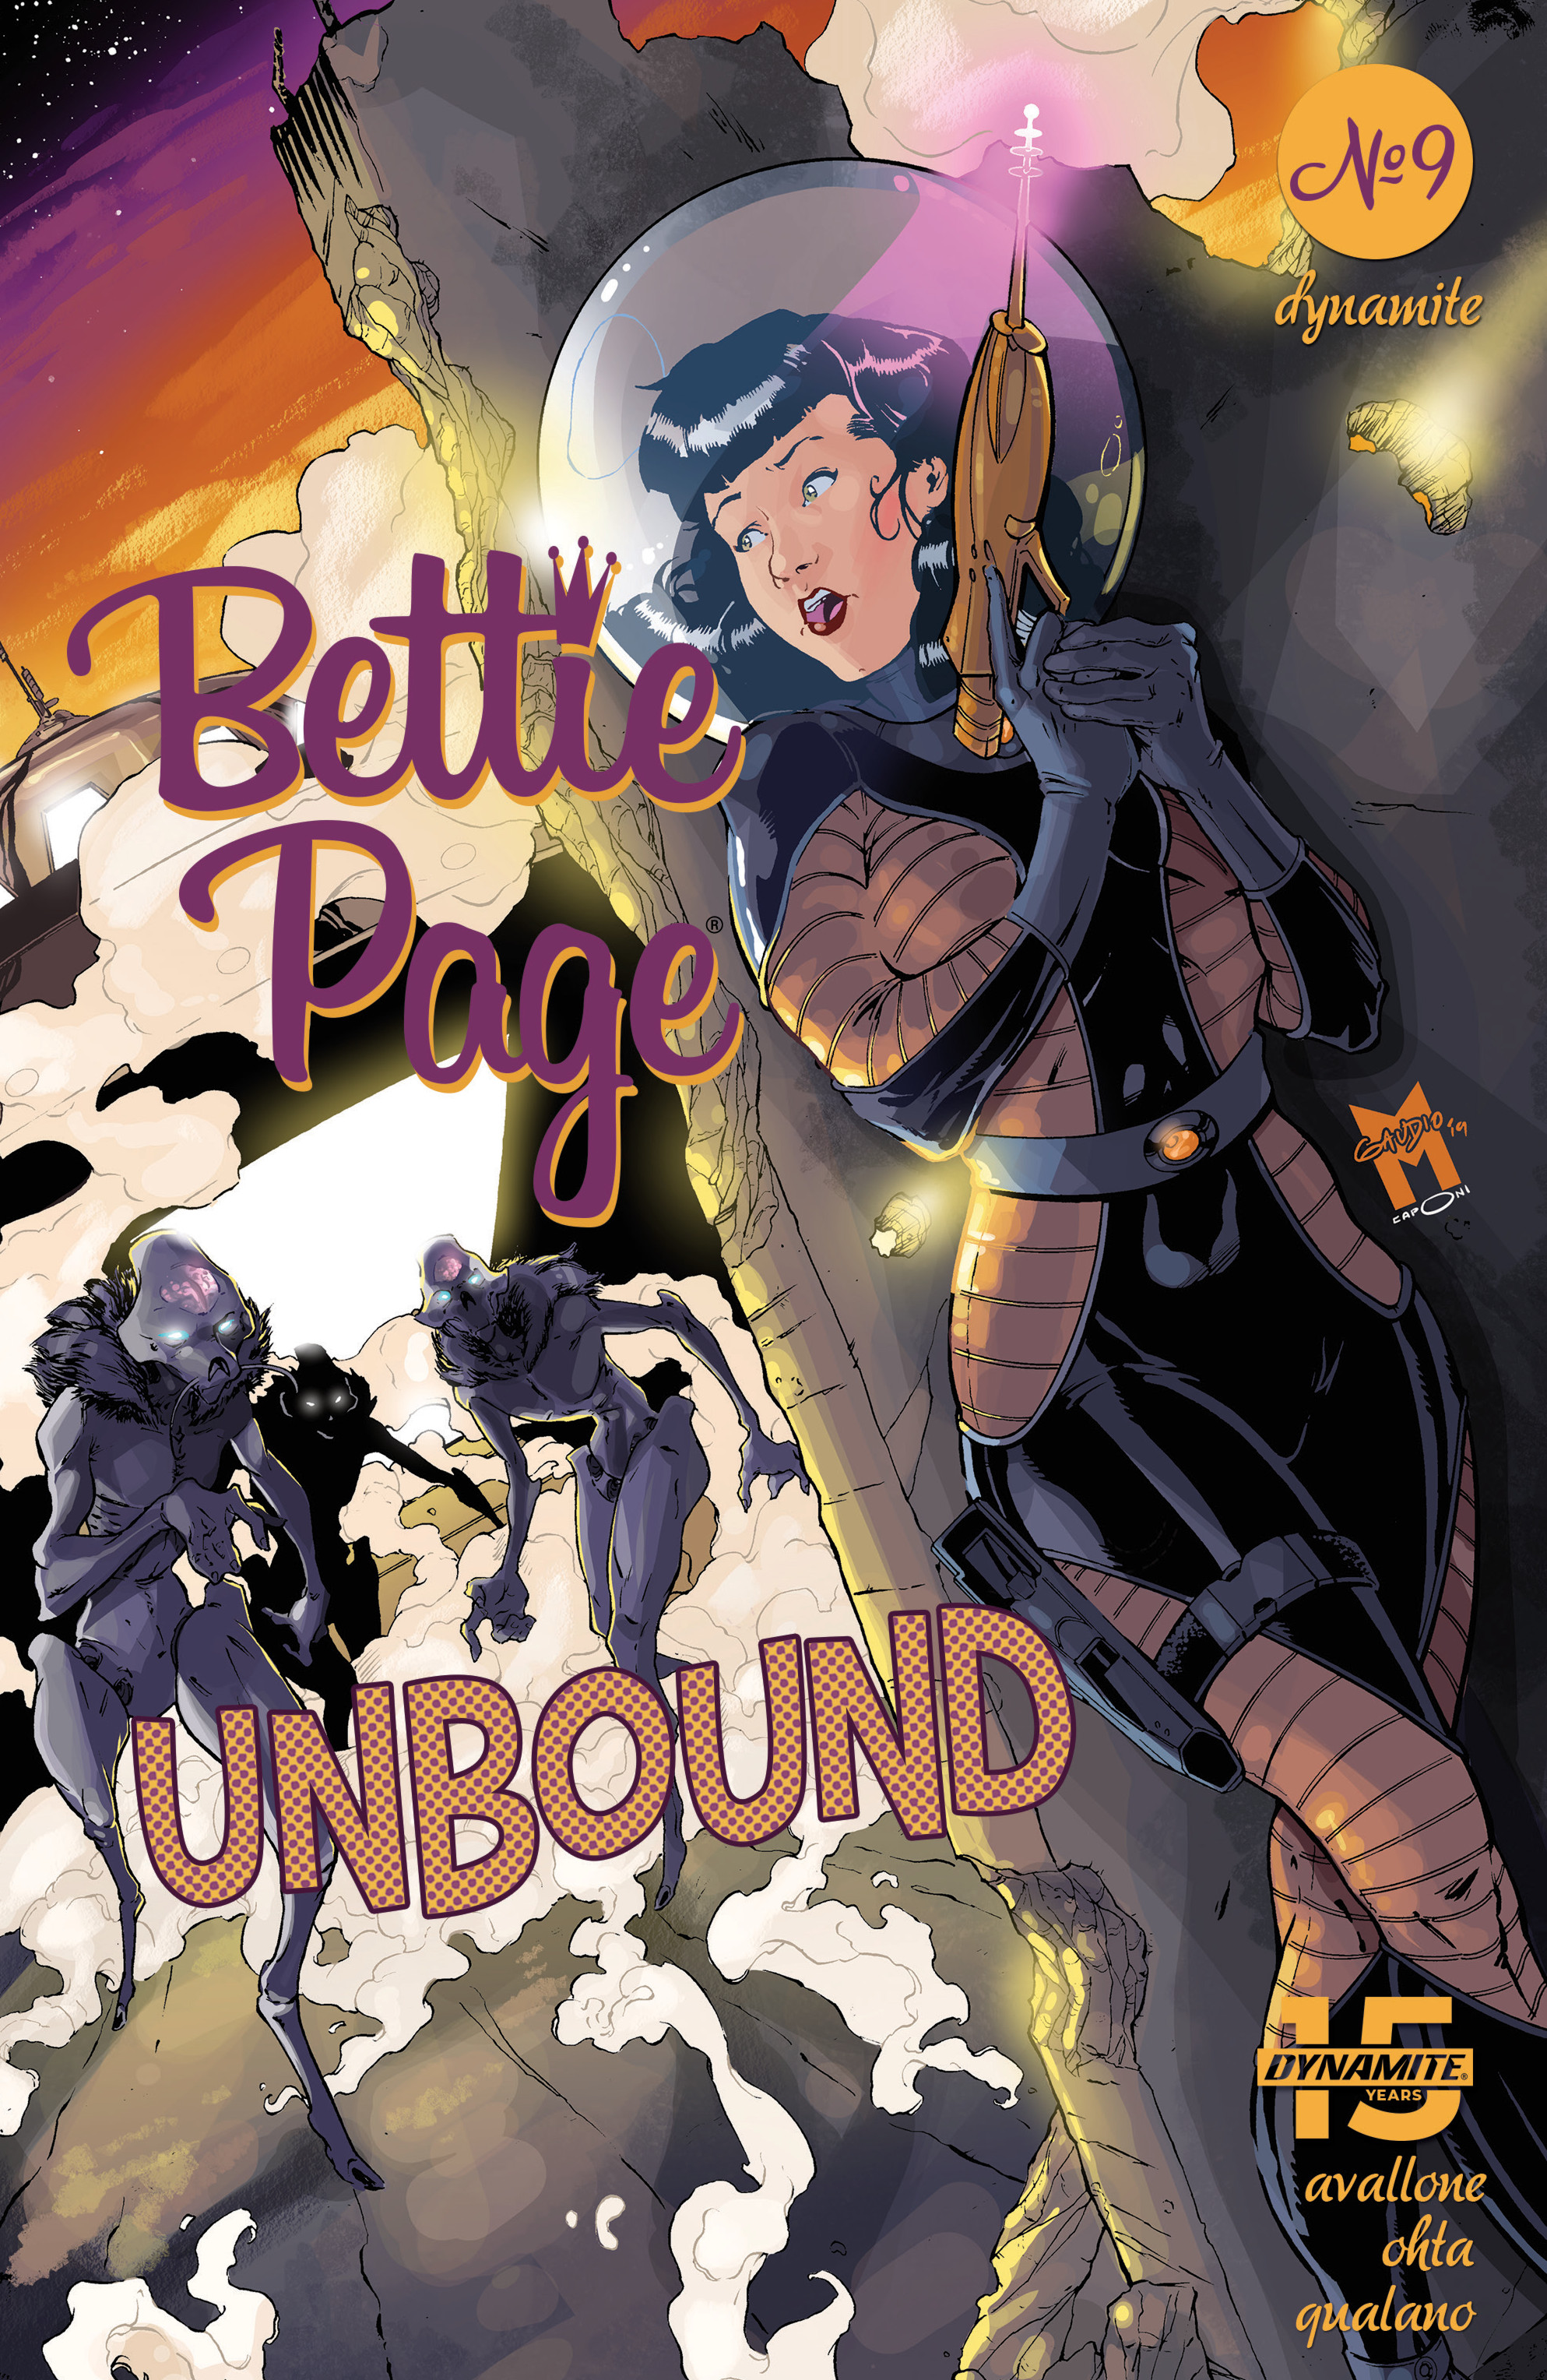 Read online Bettie Page: Unbound comic -  Issue #9 - 4